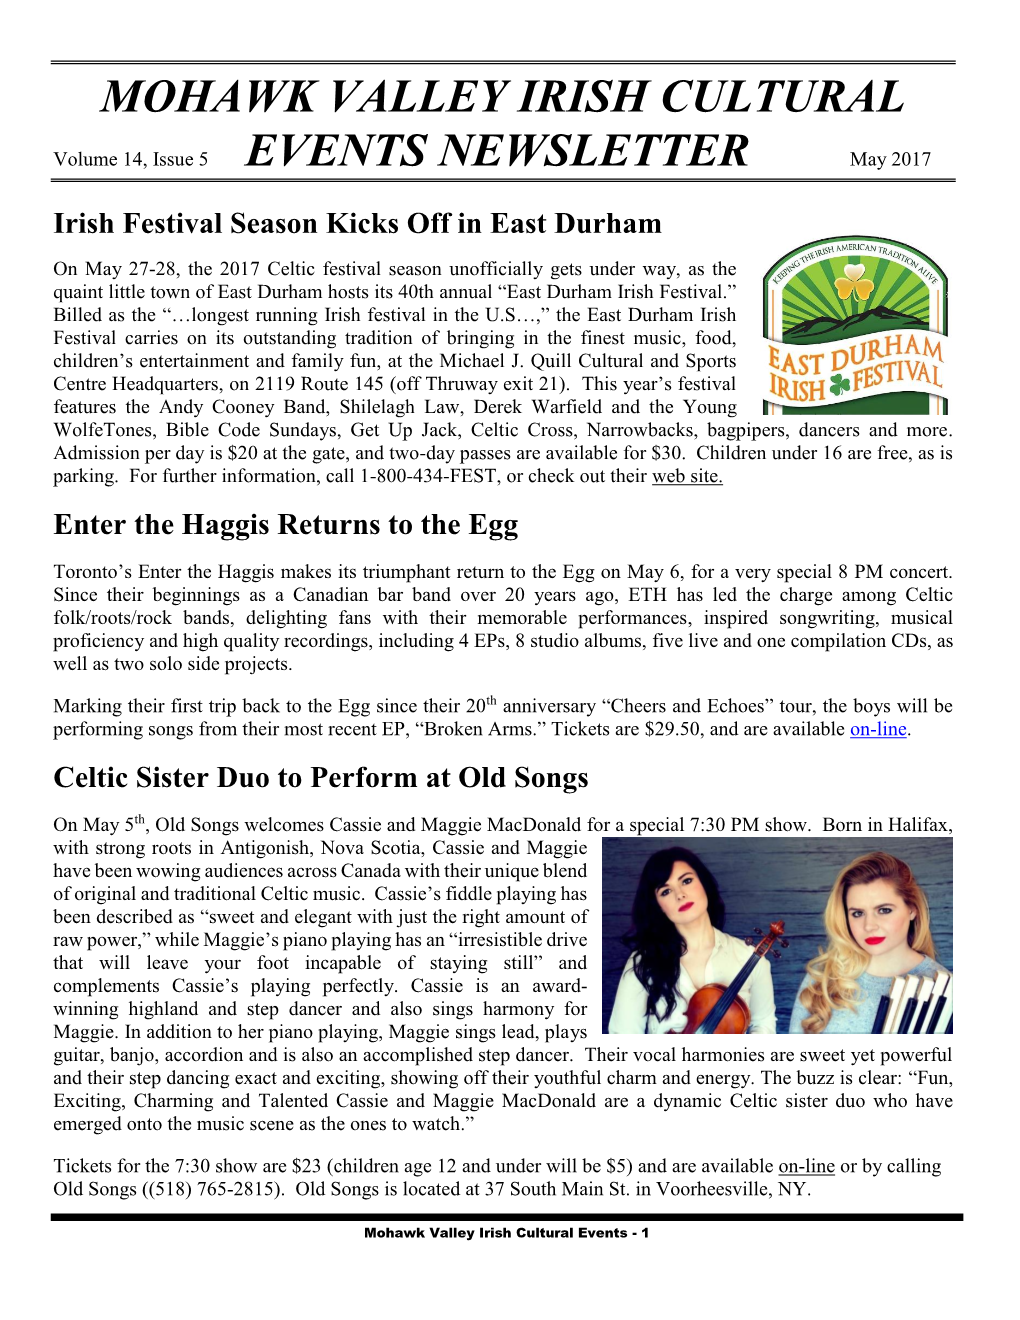 Area Irish Music Events